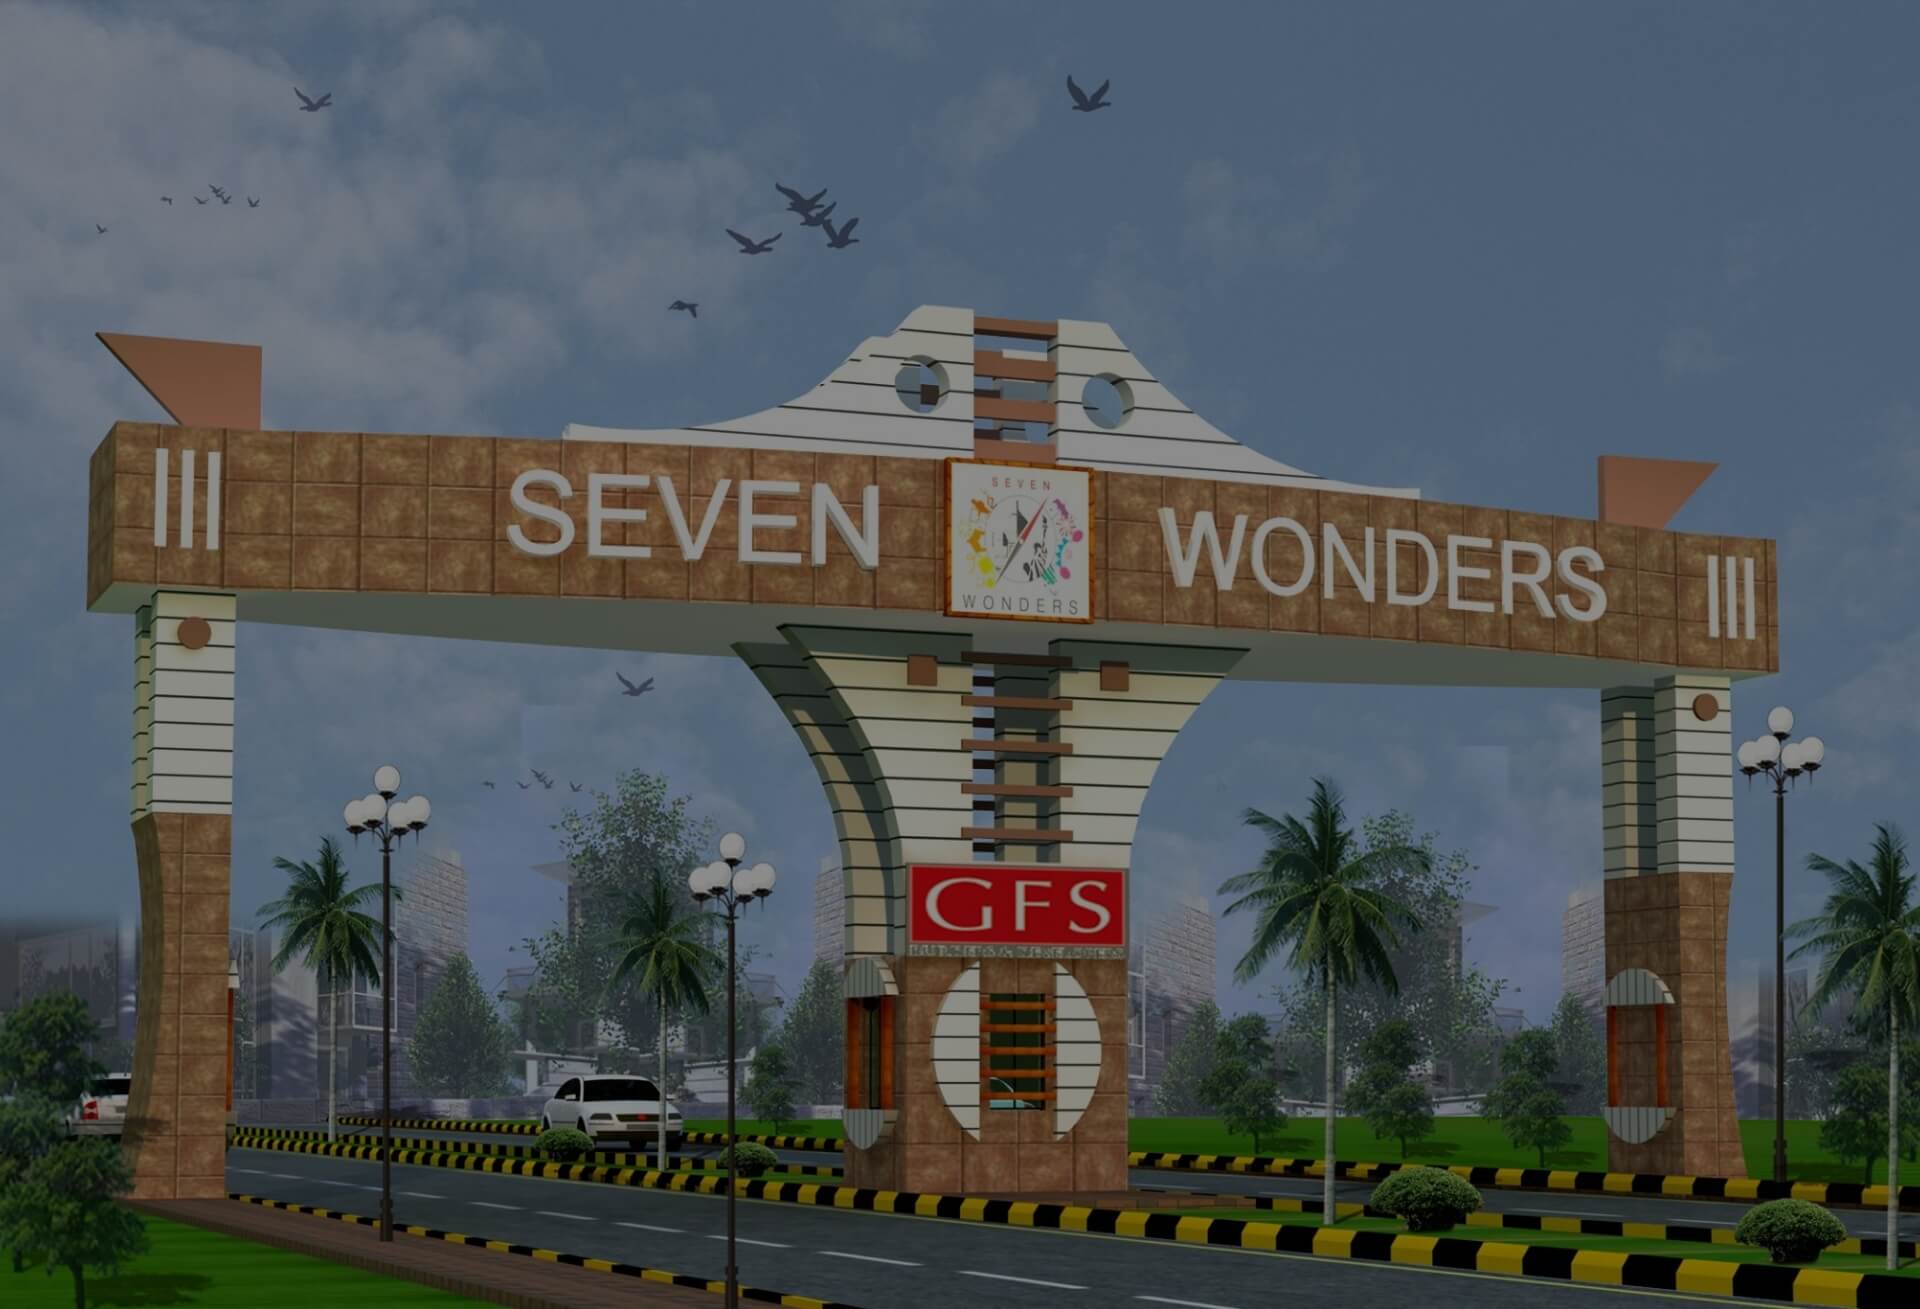 Seven-Wonders-City-isb-overlay (1)